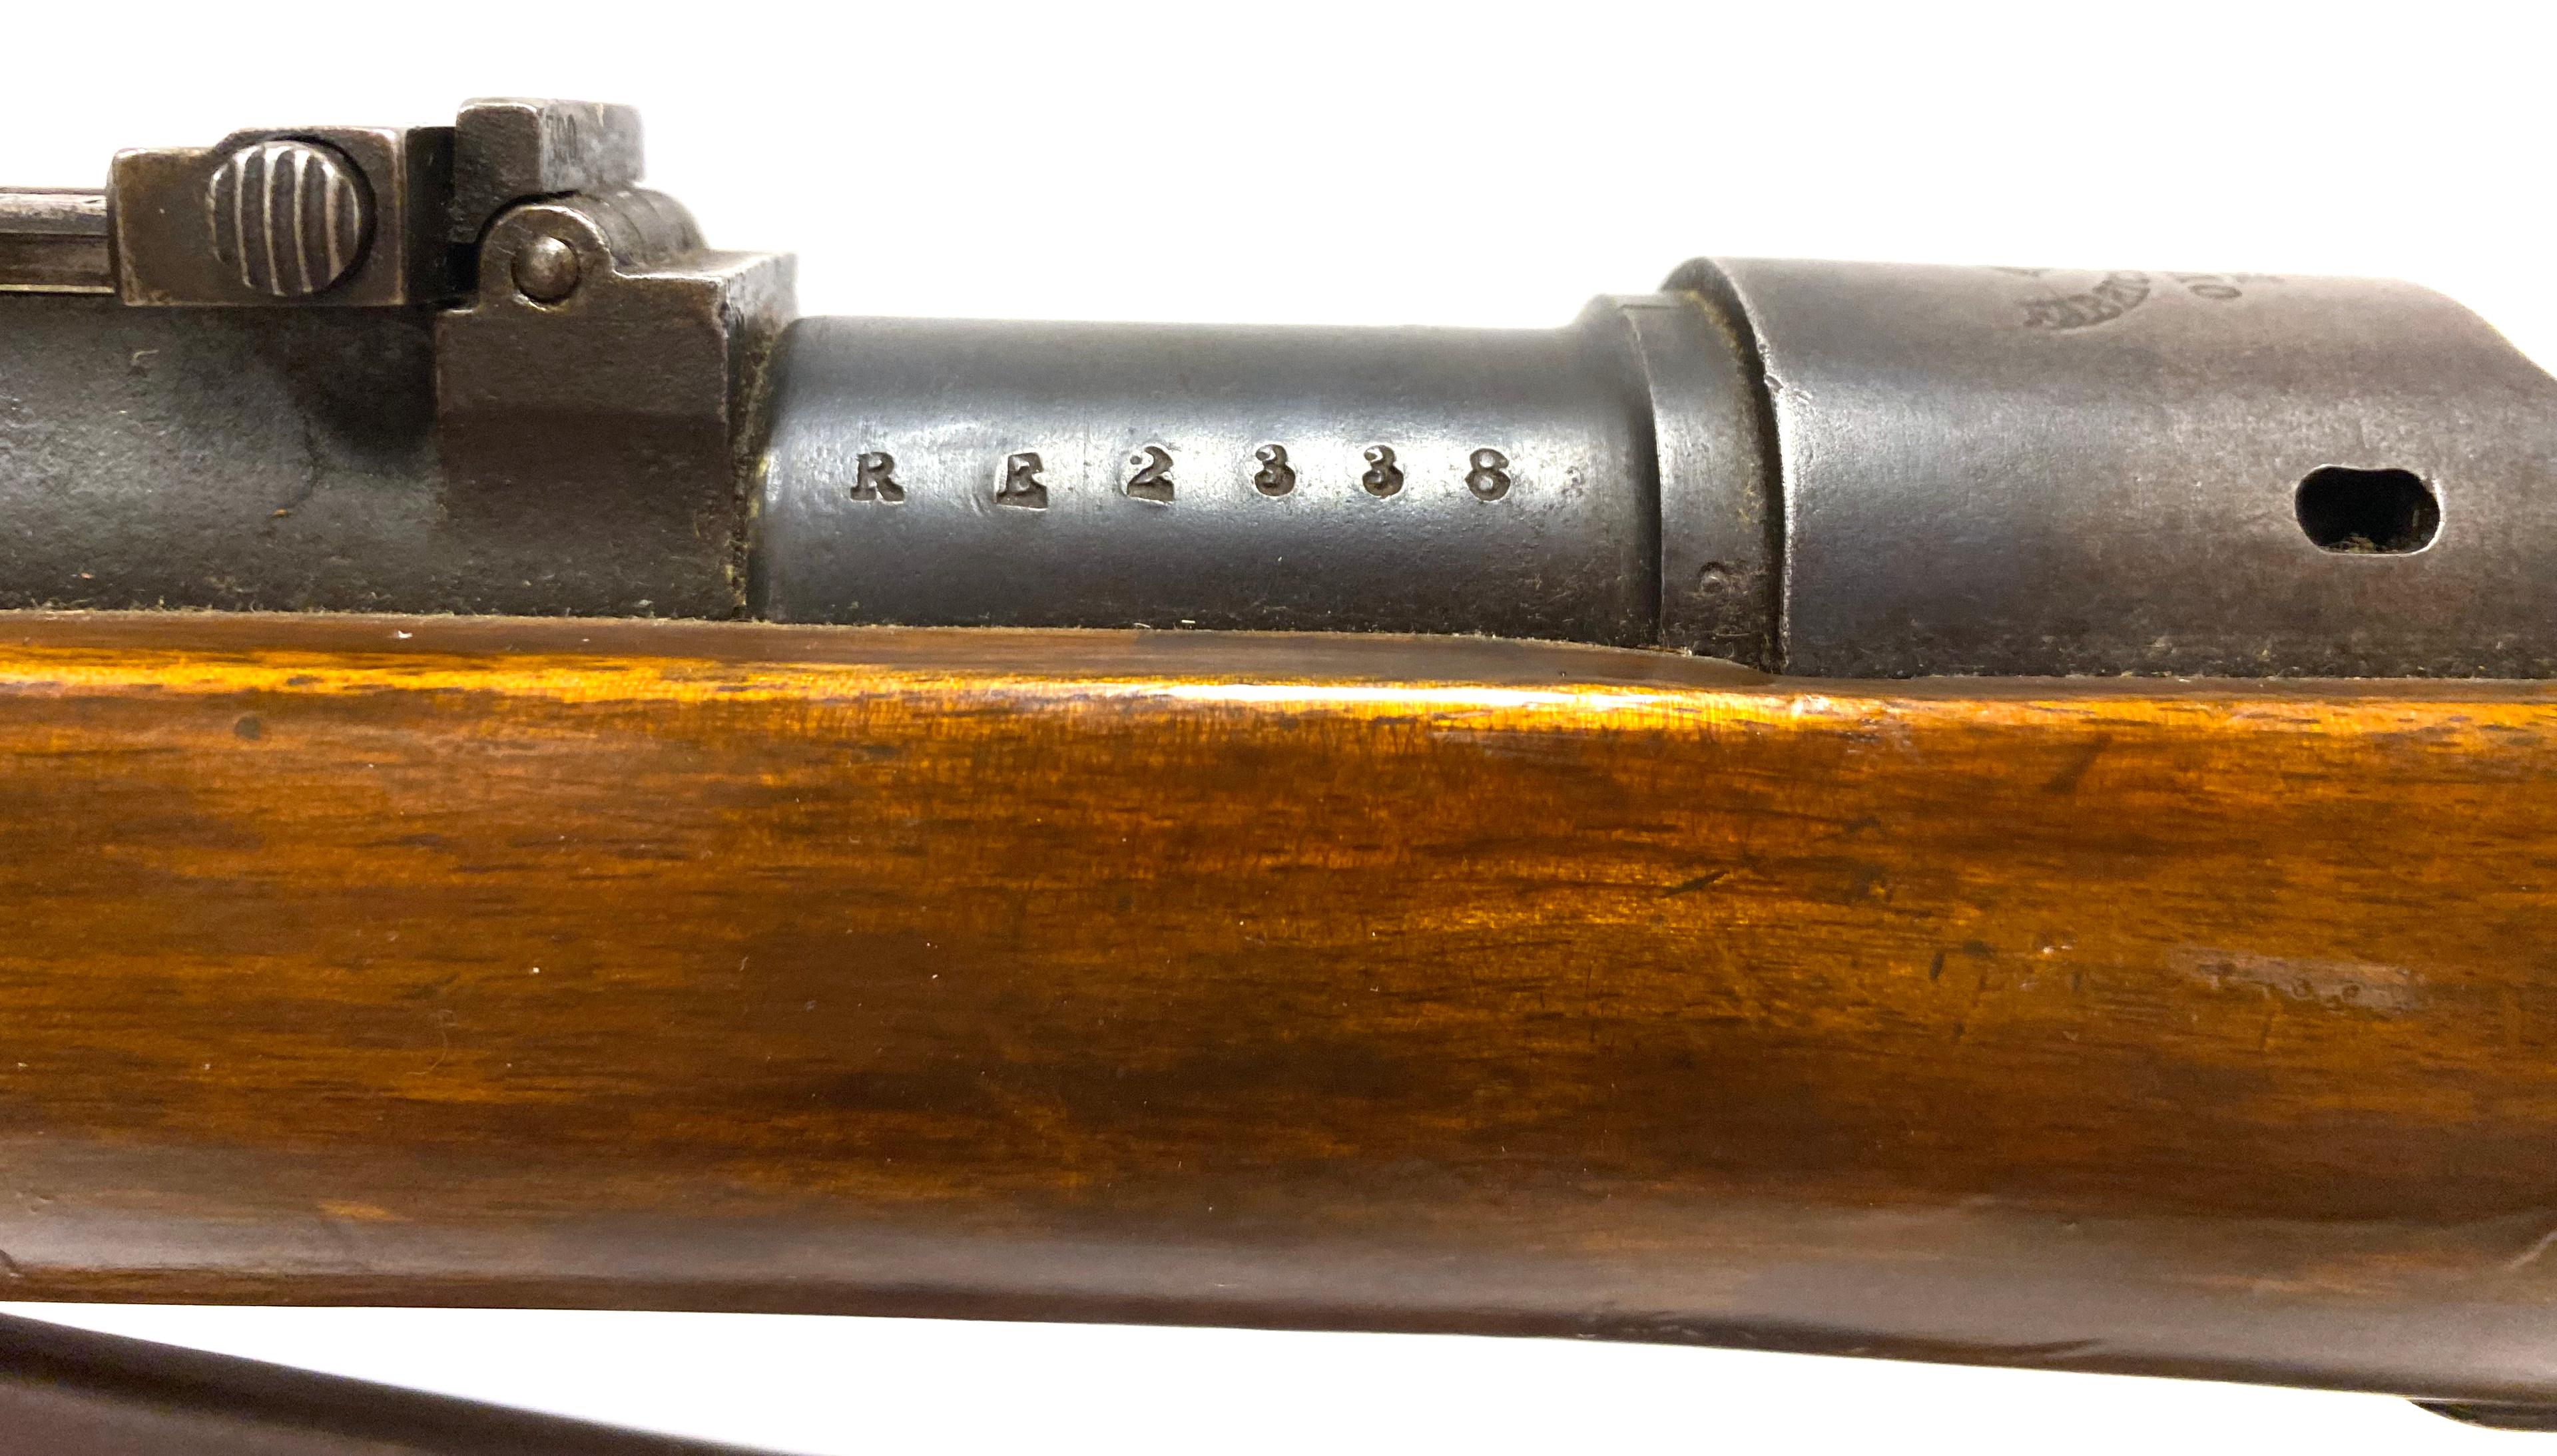 1928 Oviedo Spanish Mauser Bolt Action Rifle